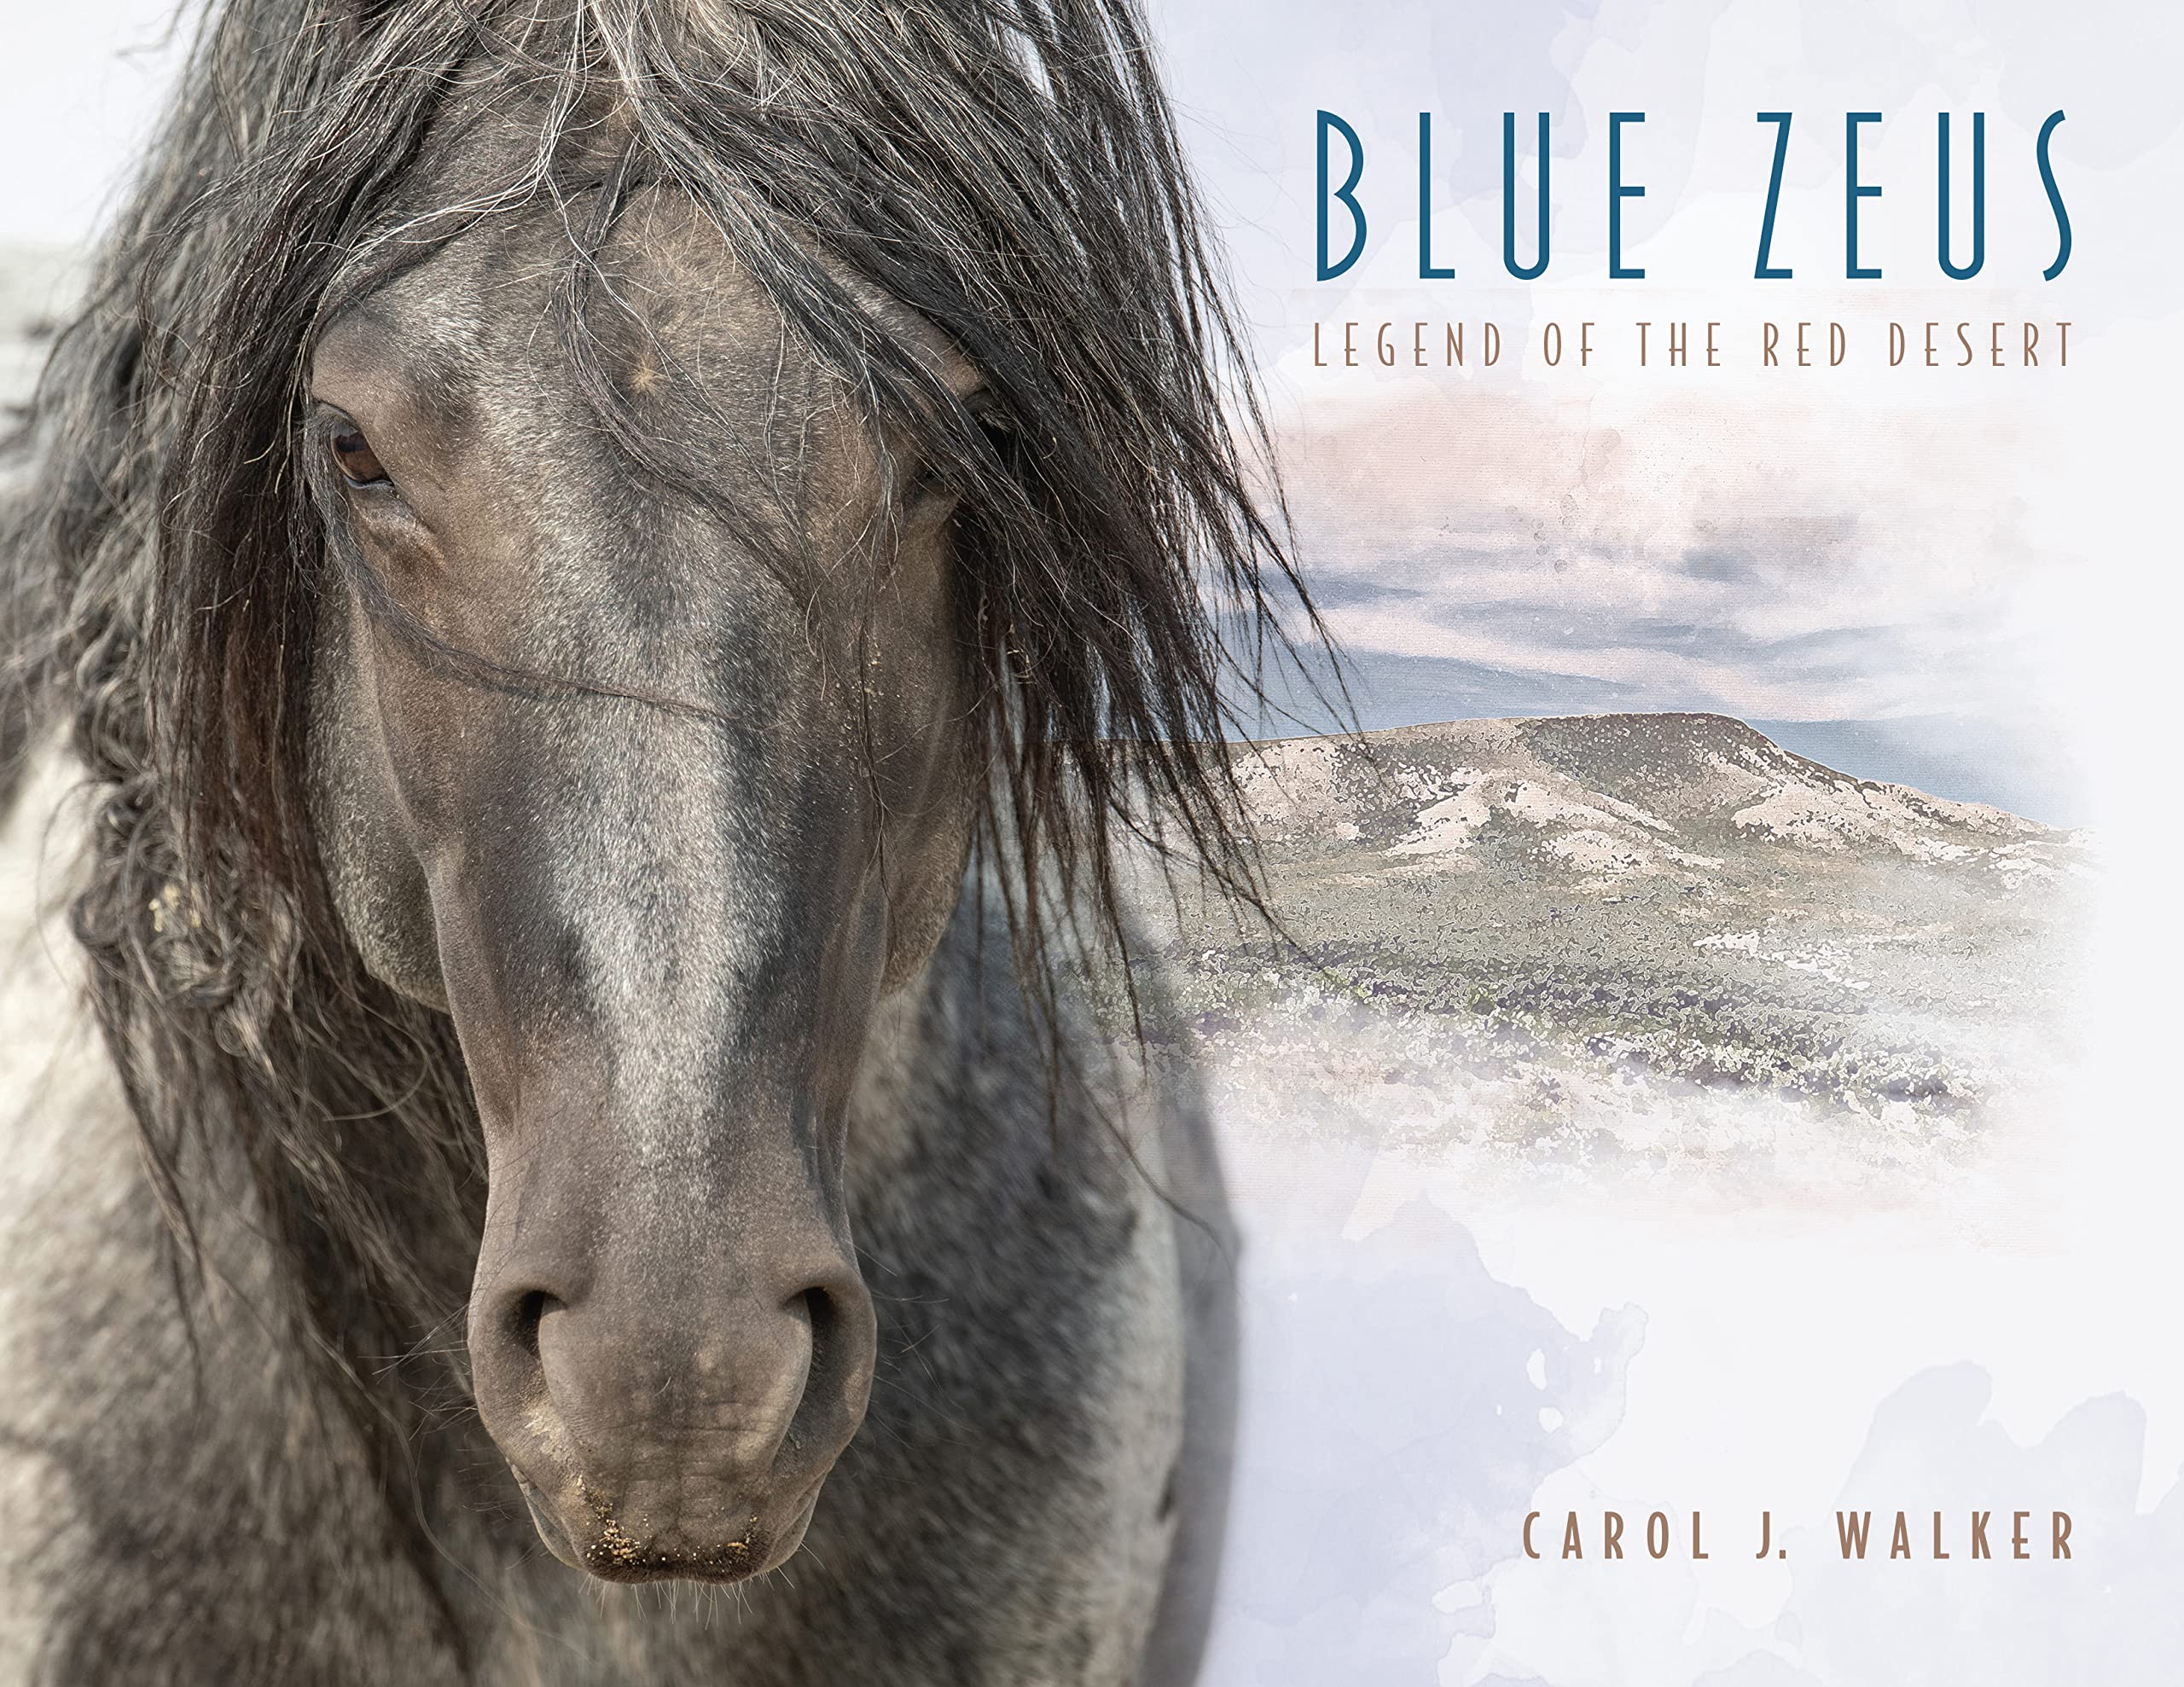 "Blue Zeus: Legend of the Red Desert" by Carol Walker Cover Art